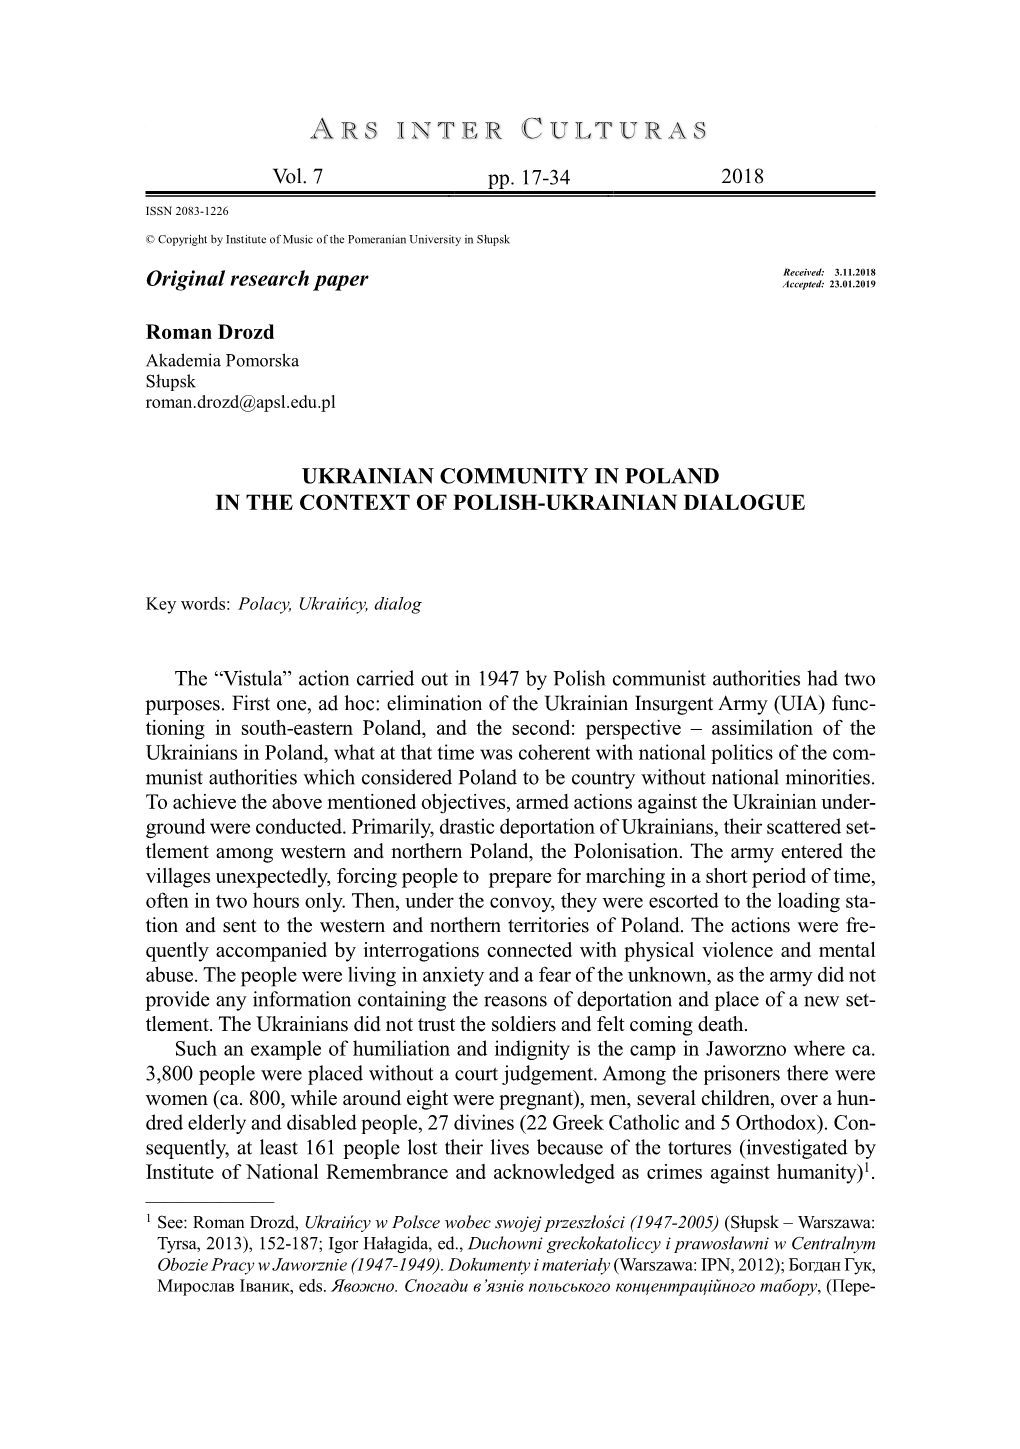 Original Research Paper UKRAINIAN COMMUNITY in POLAND in THE